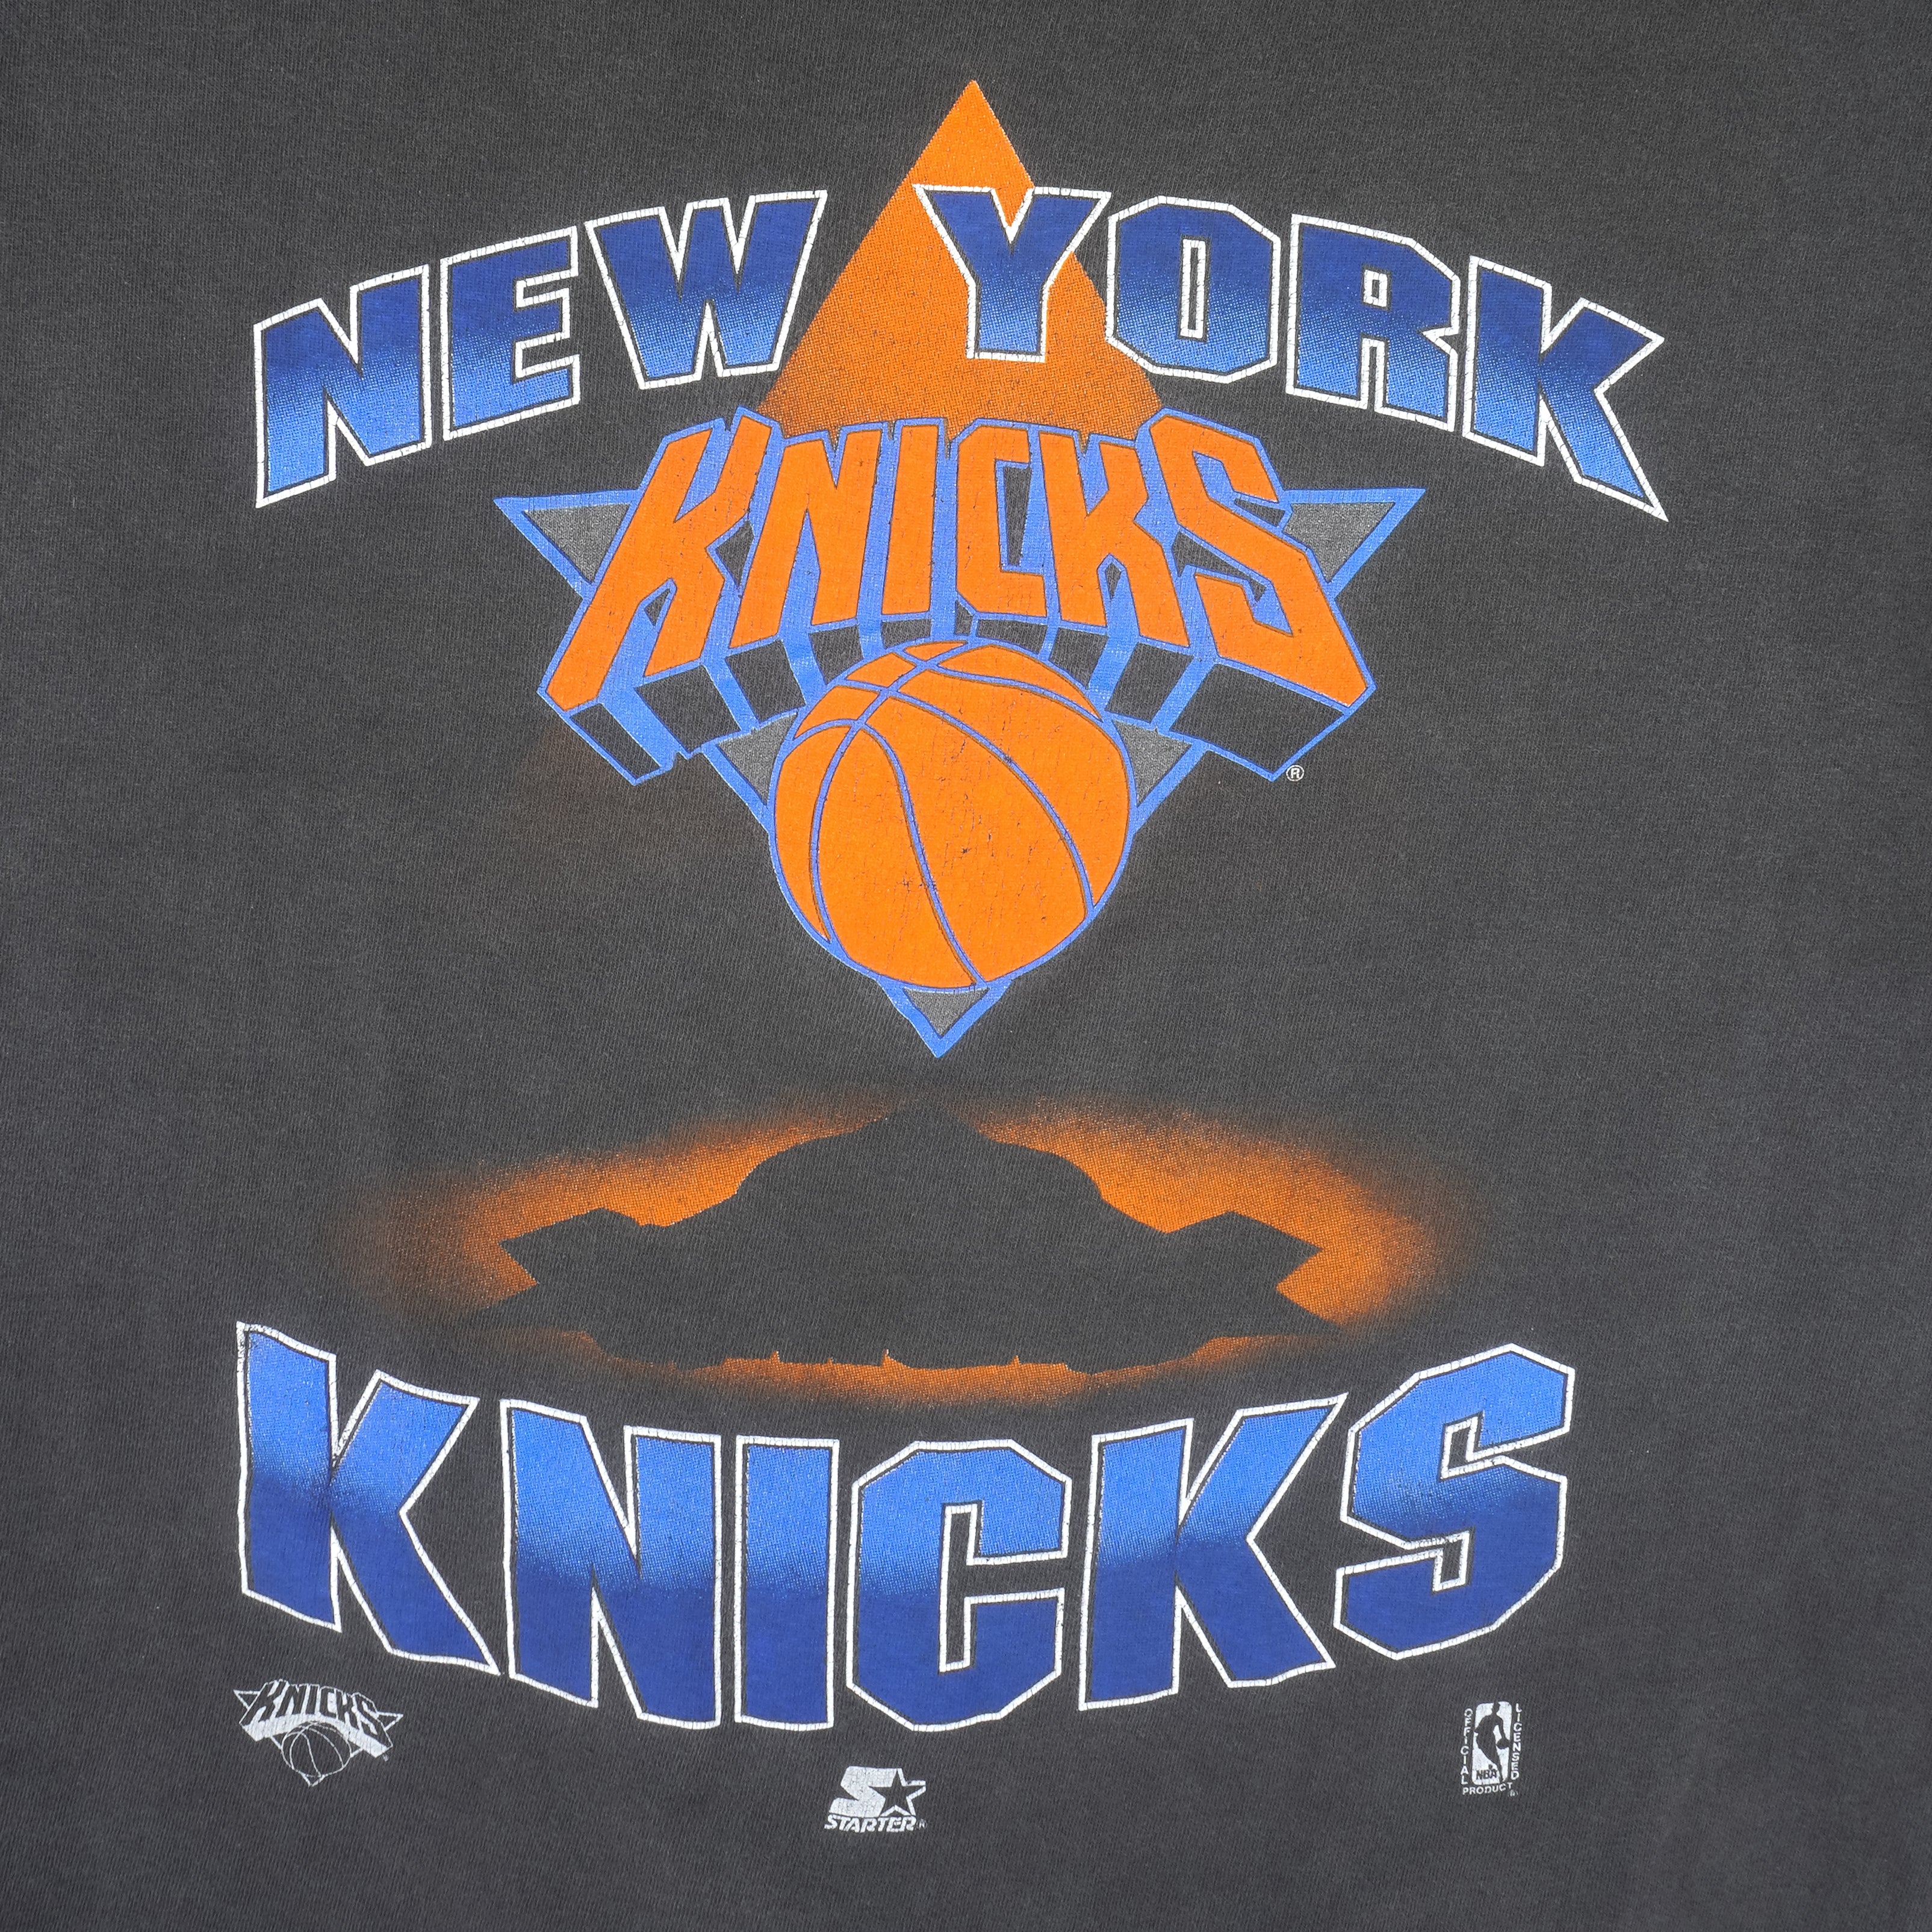 Vintage New York Knicks “Starter” T-Shirt